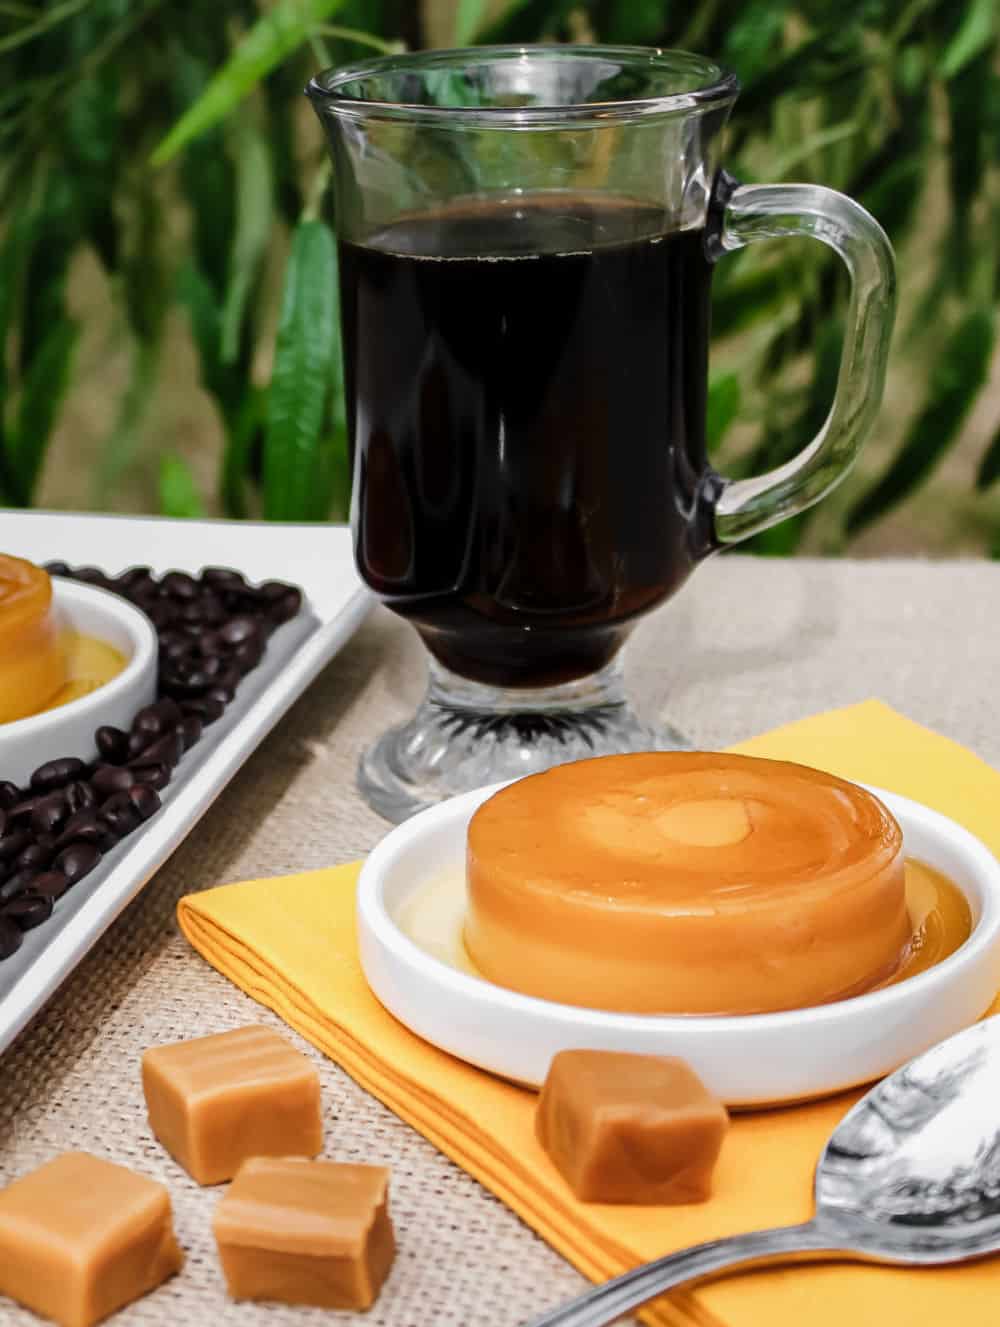 caramel flan with mug of coffee.